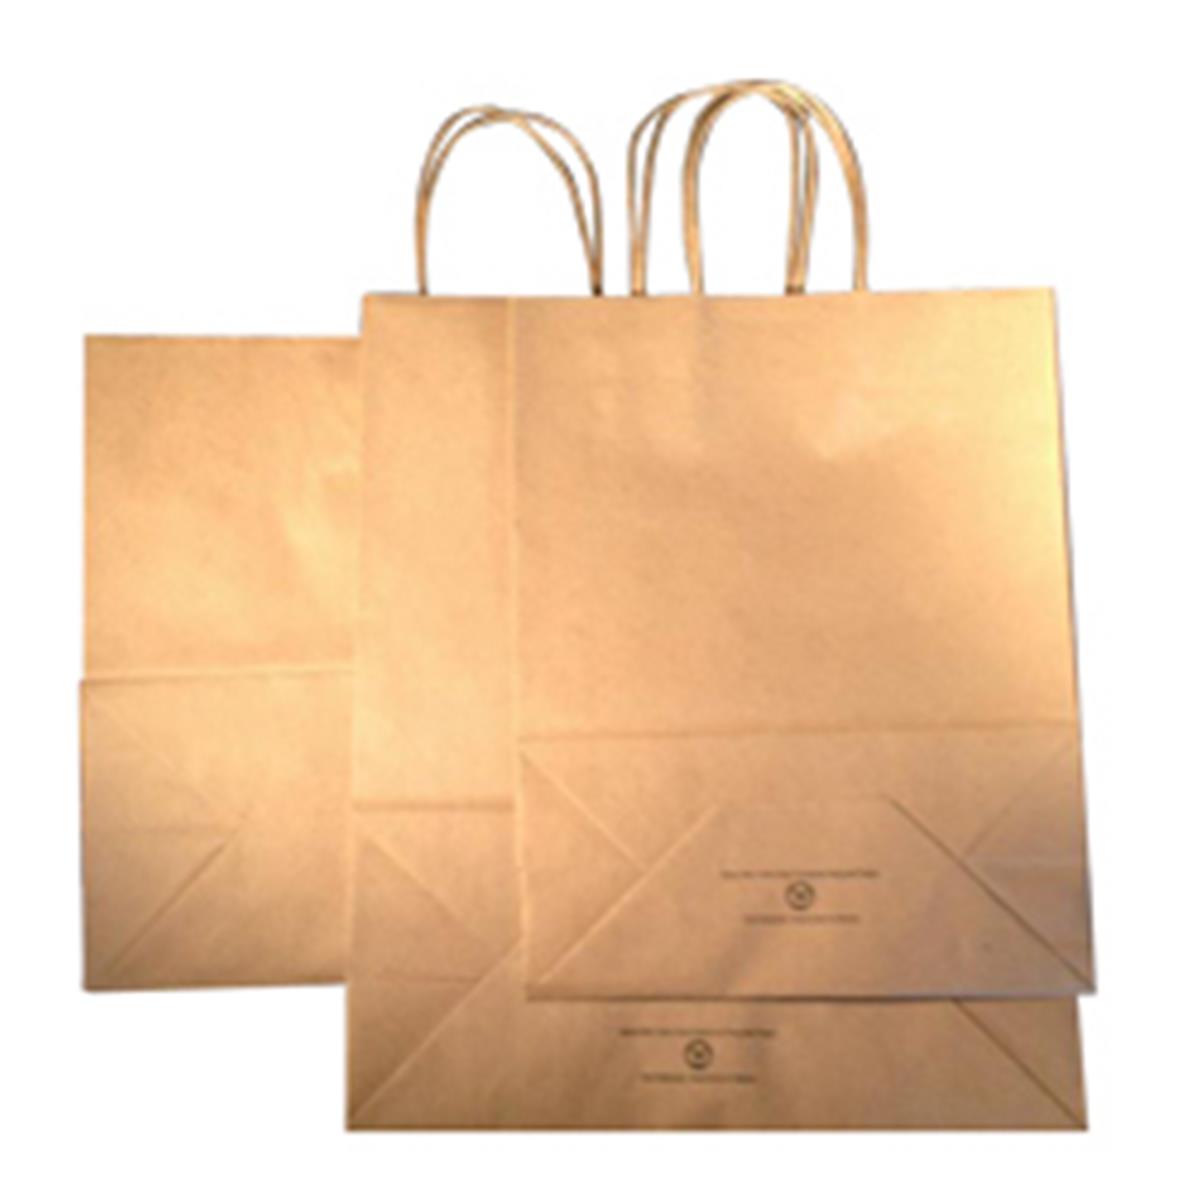 28633 Pe 18 X 7 X 18.75 In. Cargo Shopping Bag - Case Of 200